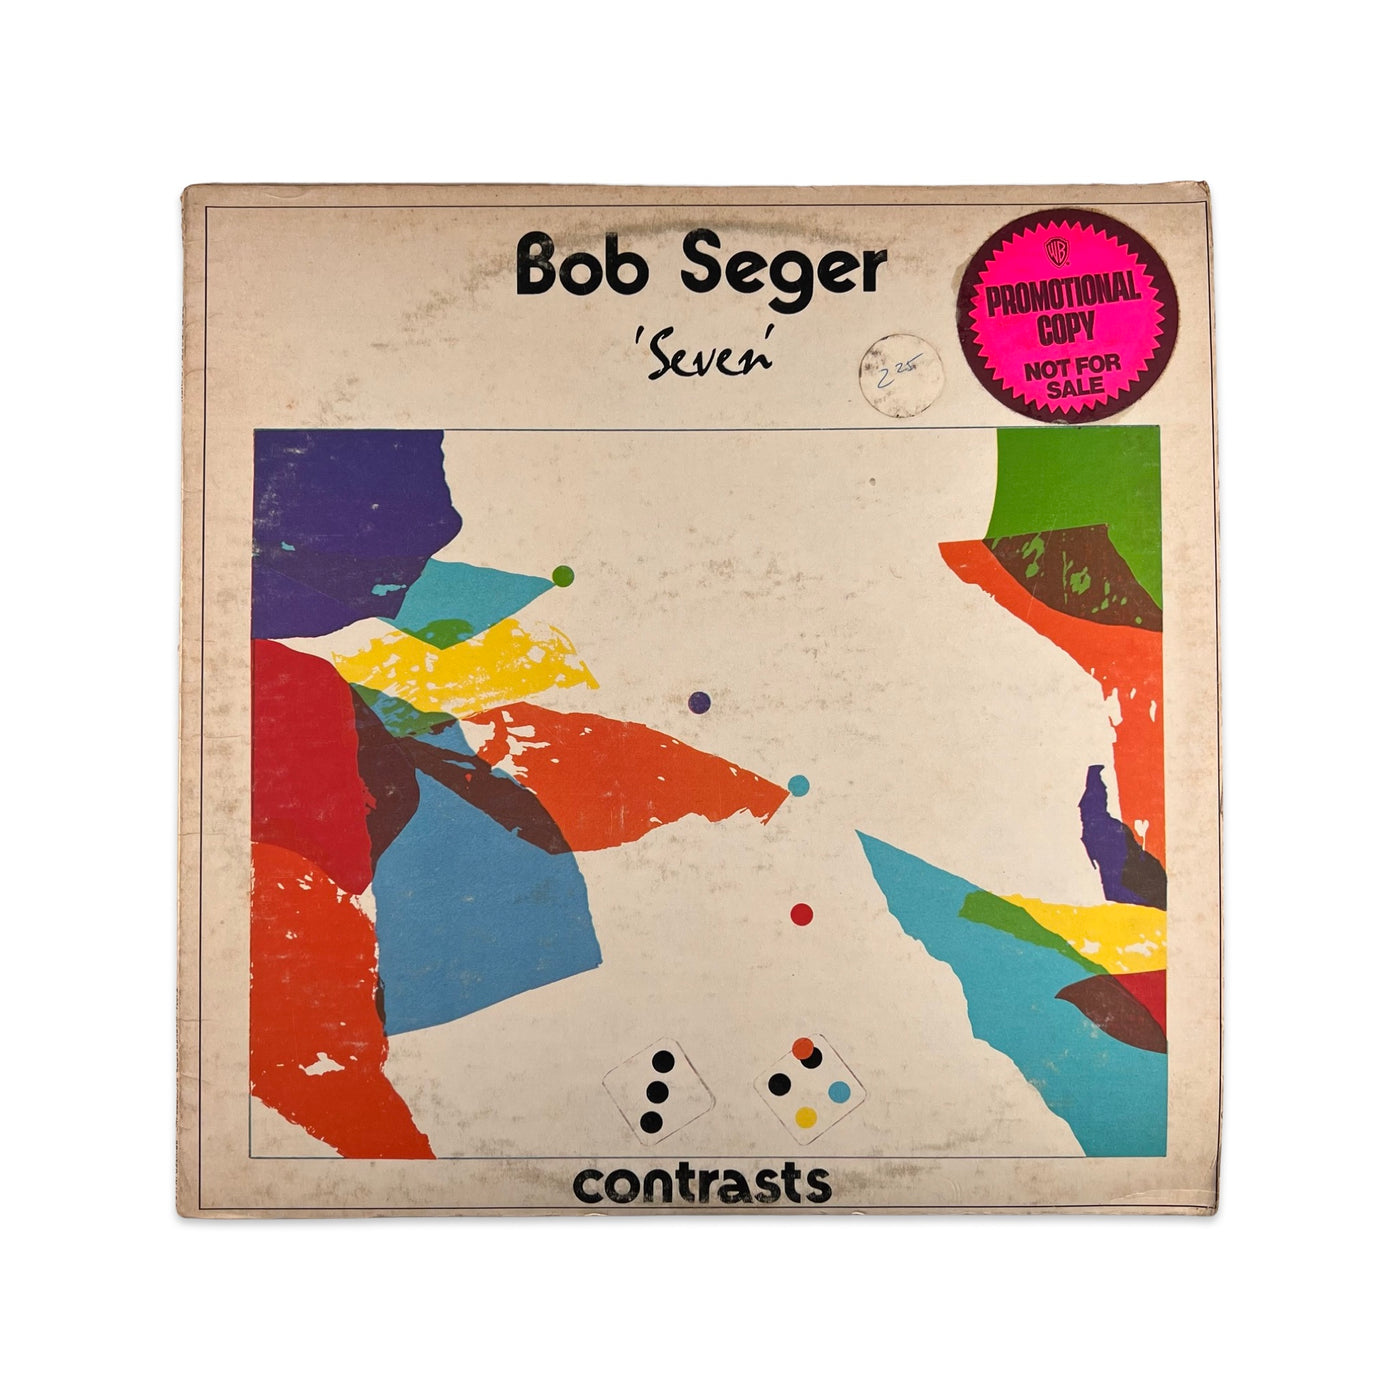 Bob Seger – Seven - 1974 Promo